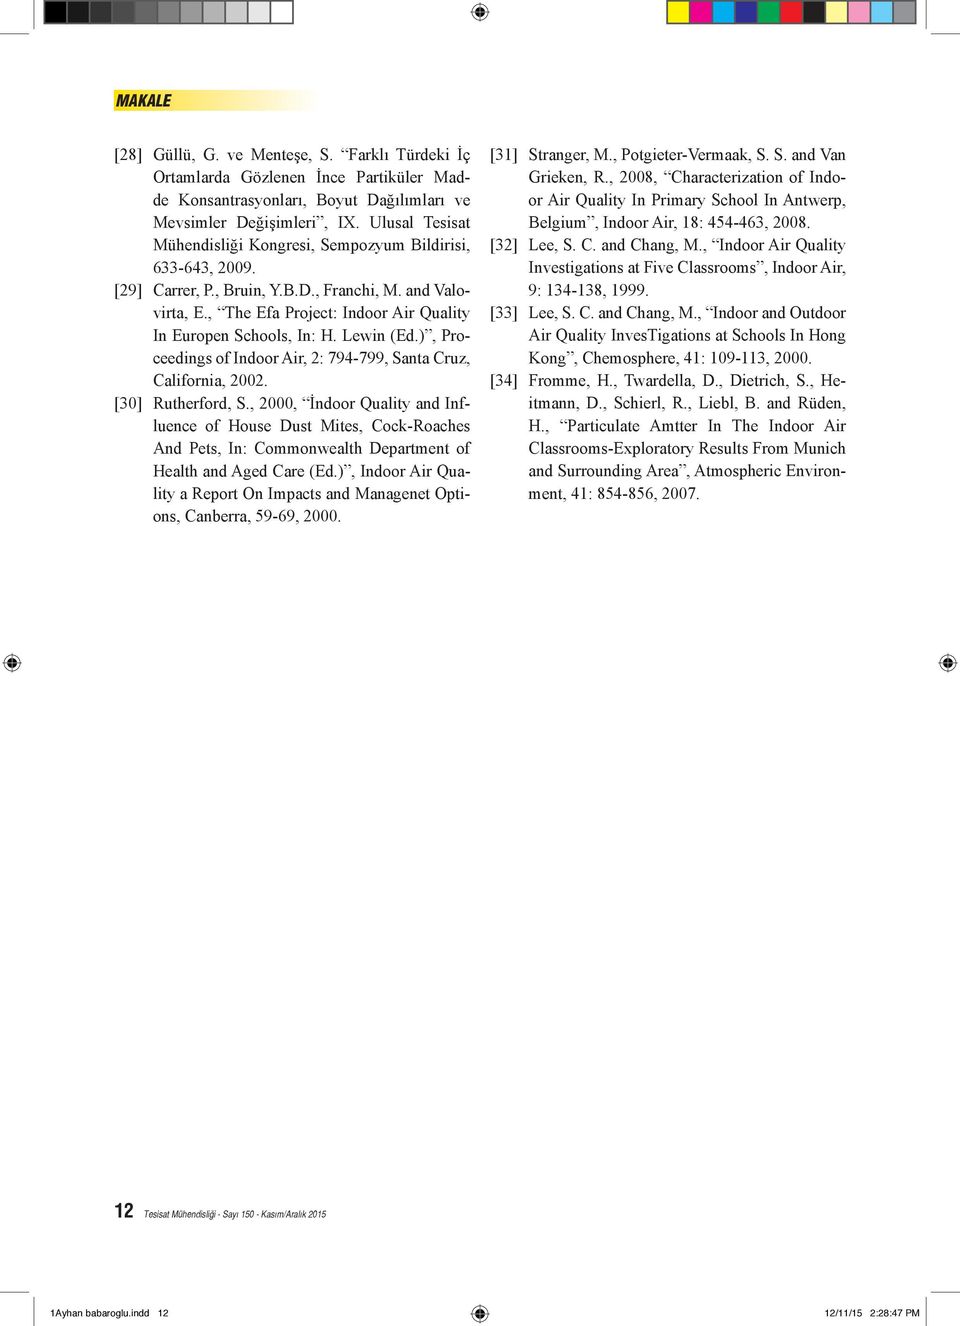 Lewin (Ed.), Proceedings of Indoor Air, 2: 794-799, Santa Cruz, California, 2002. [30] Rutherford, S.